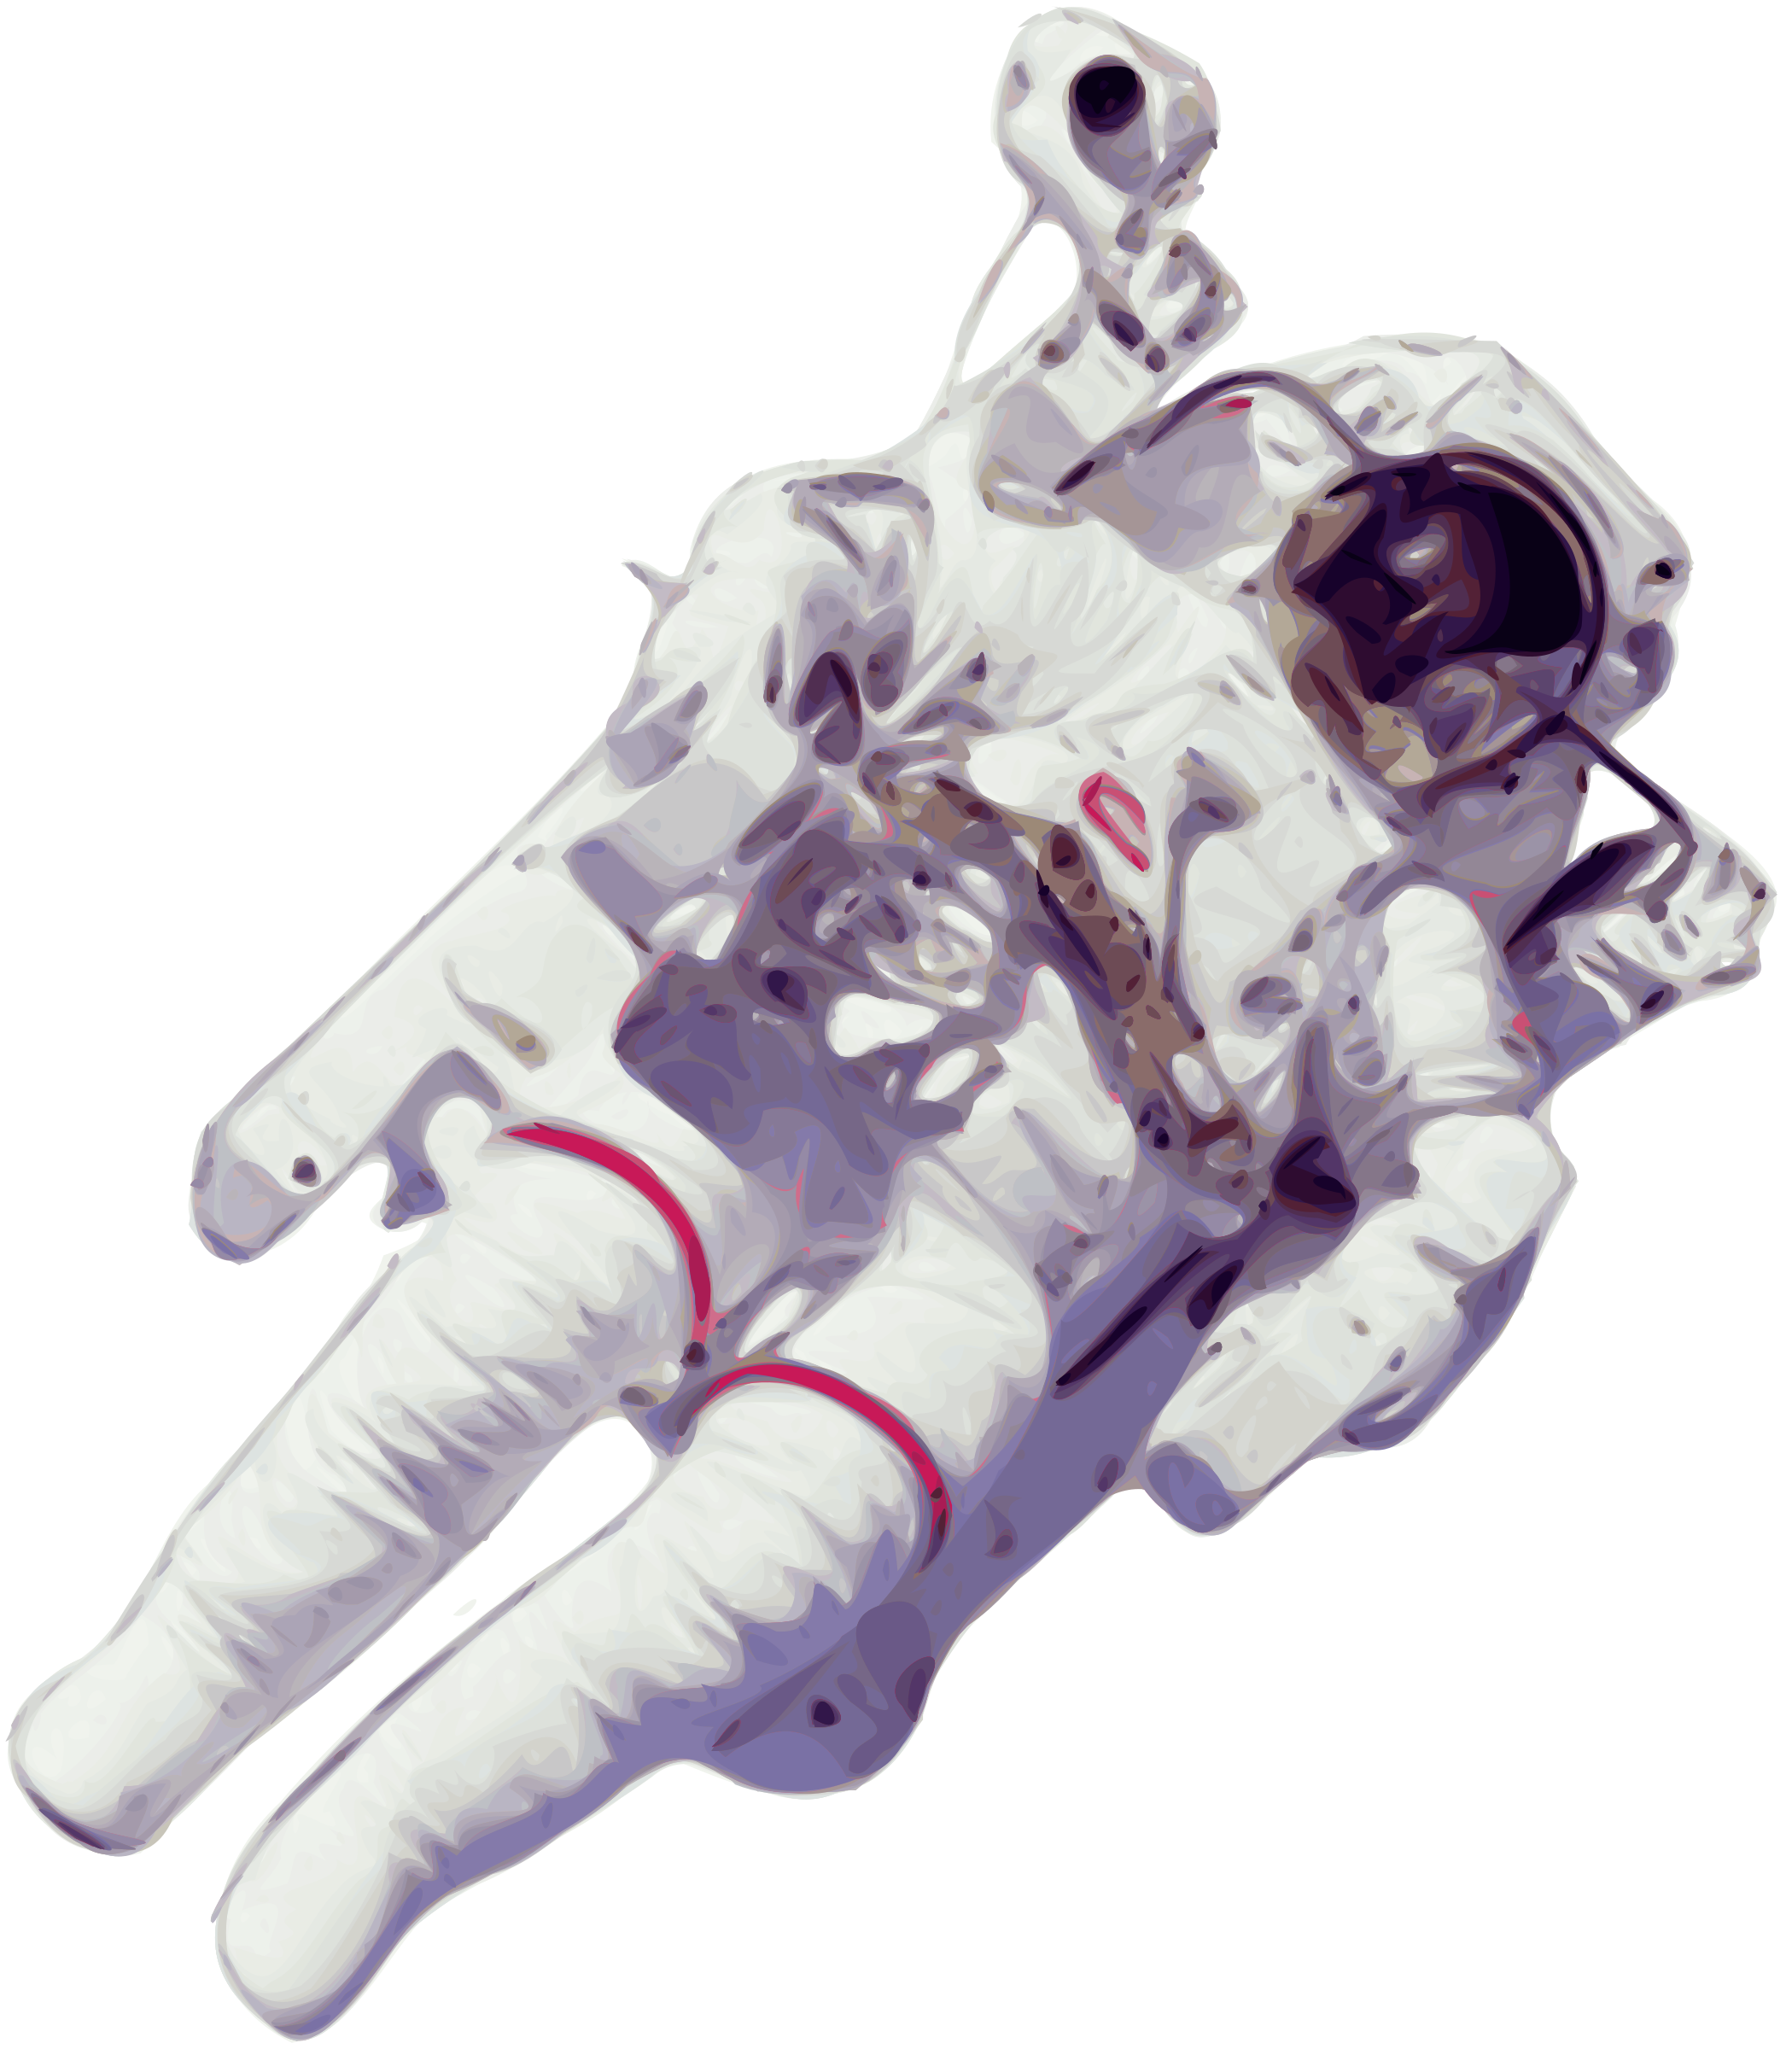 Download PNG image - Astronaut Transparent Background 